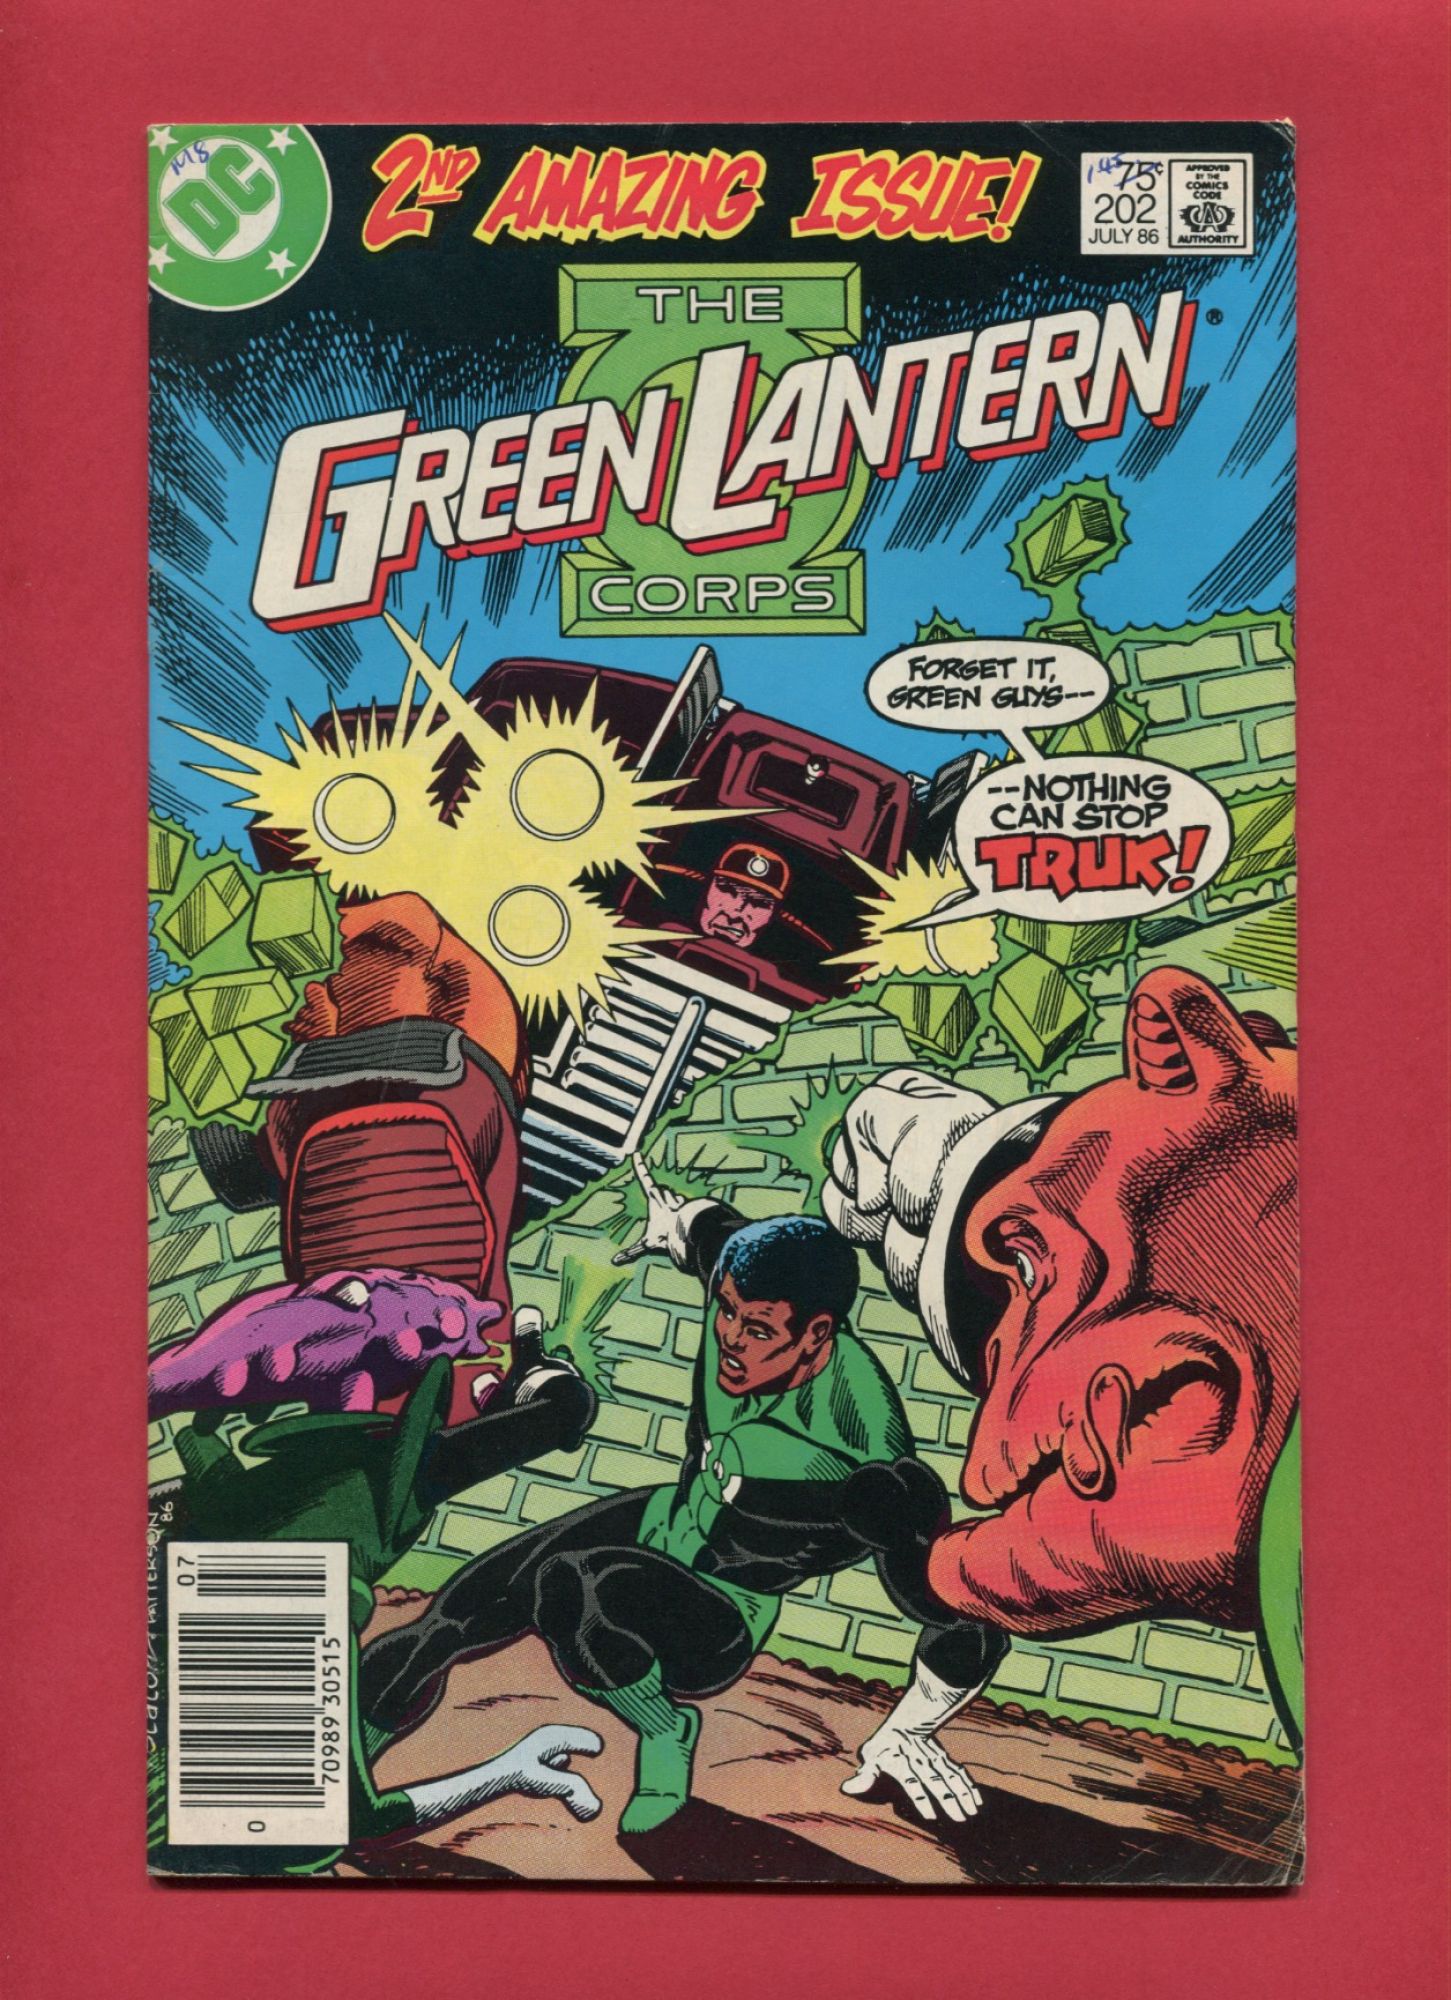 Green Lantern #202, Jul 1986, 6.0 FN